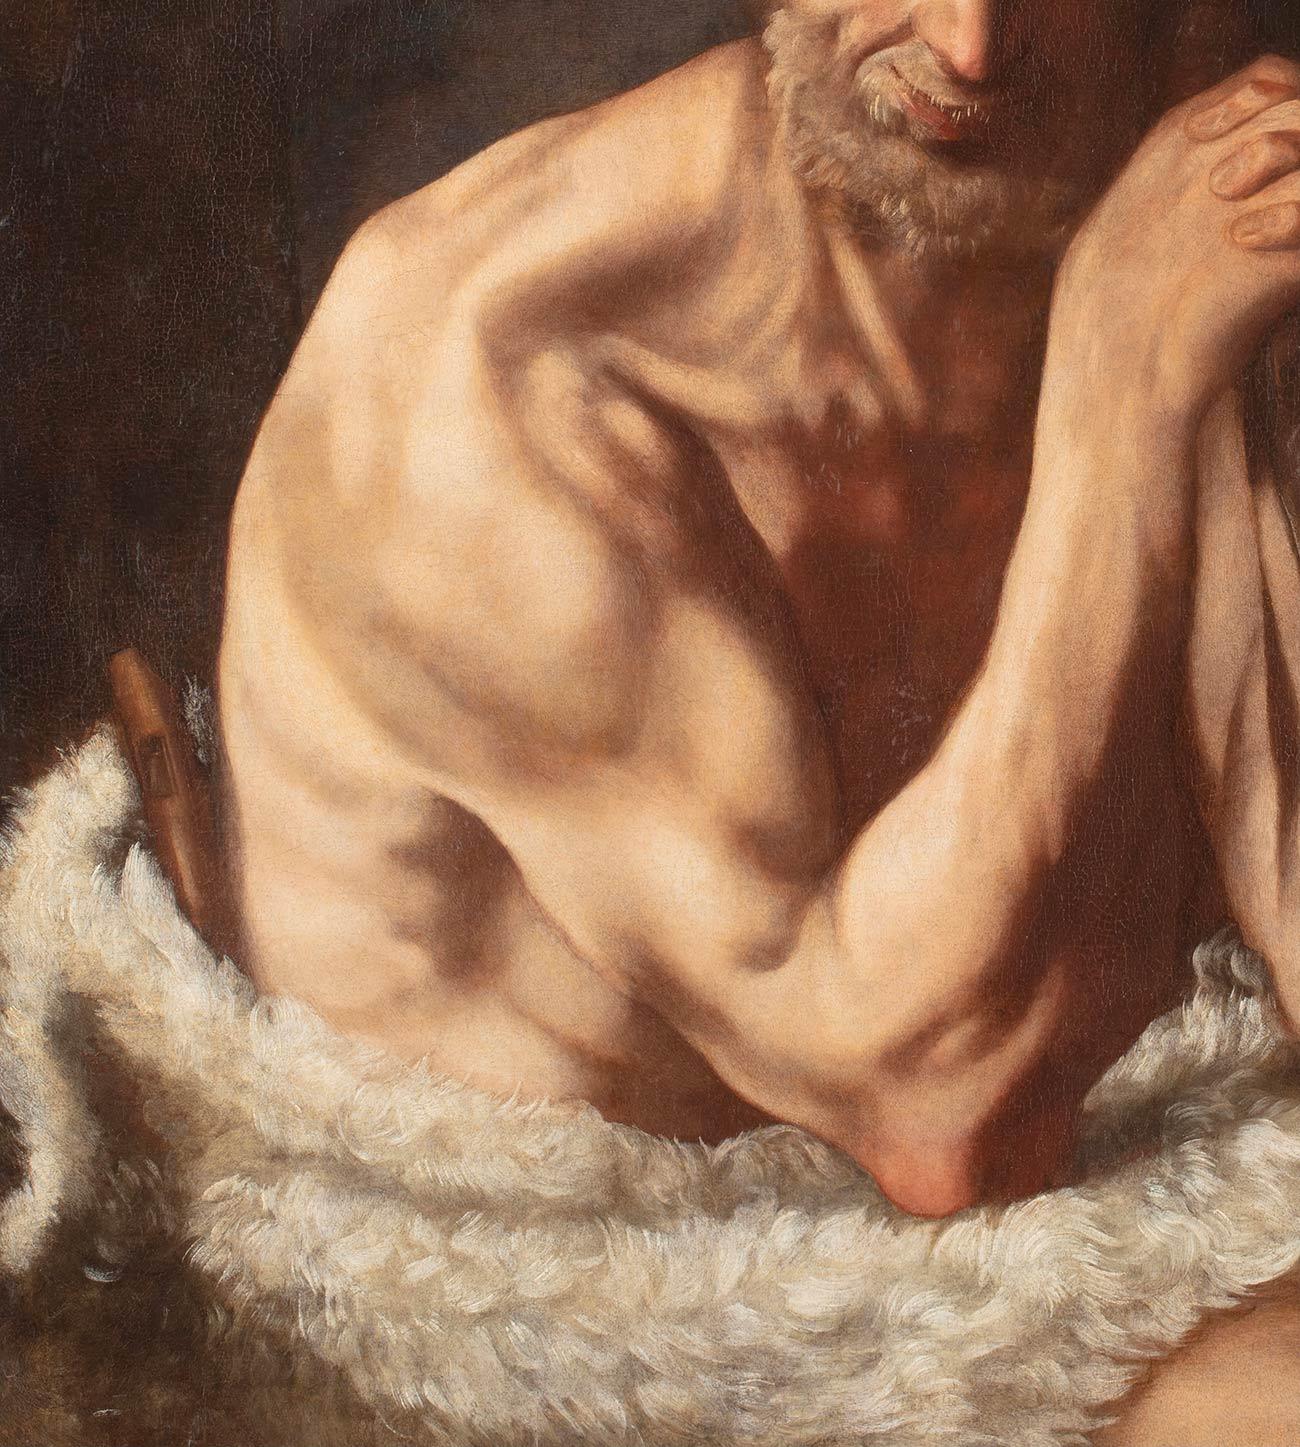 Cristoforo Serra (Cesena 1600 - Cesena 1689)
Portrait of a Shepherd 
Oil on canvas, cm. 92 x 75 - with frame cm. 106,5 x 94,5 
Antique giltwood cassetta frame, carved and sculpted
Publications: unpublished 

This curious portrait depicts a shepherd